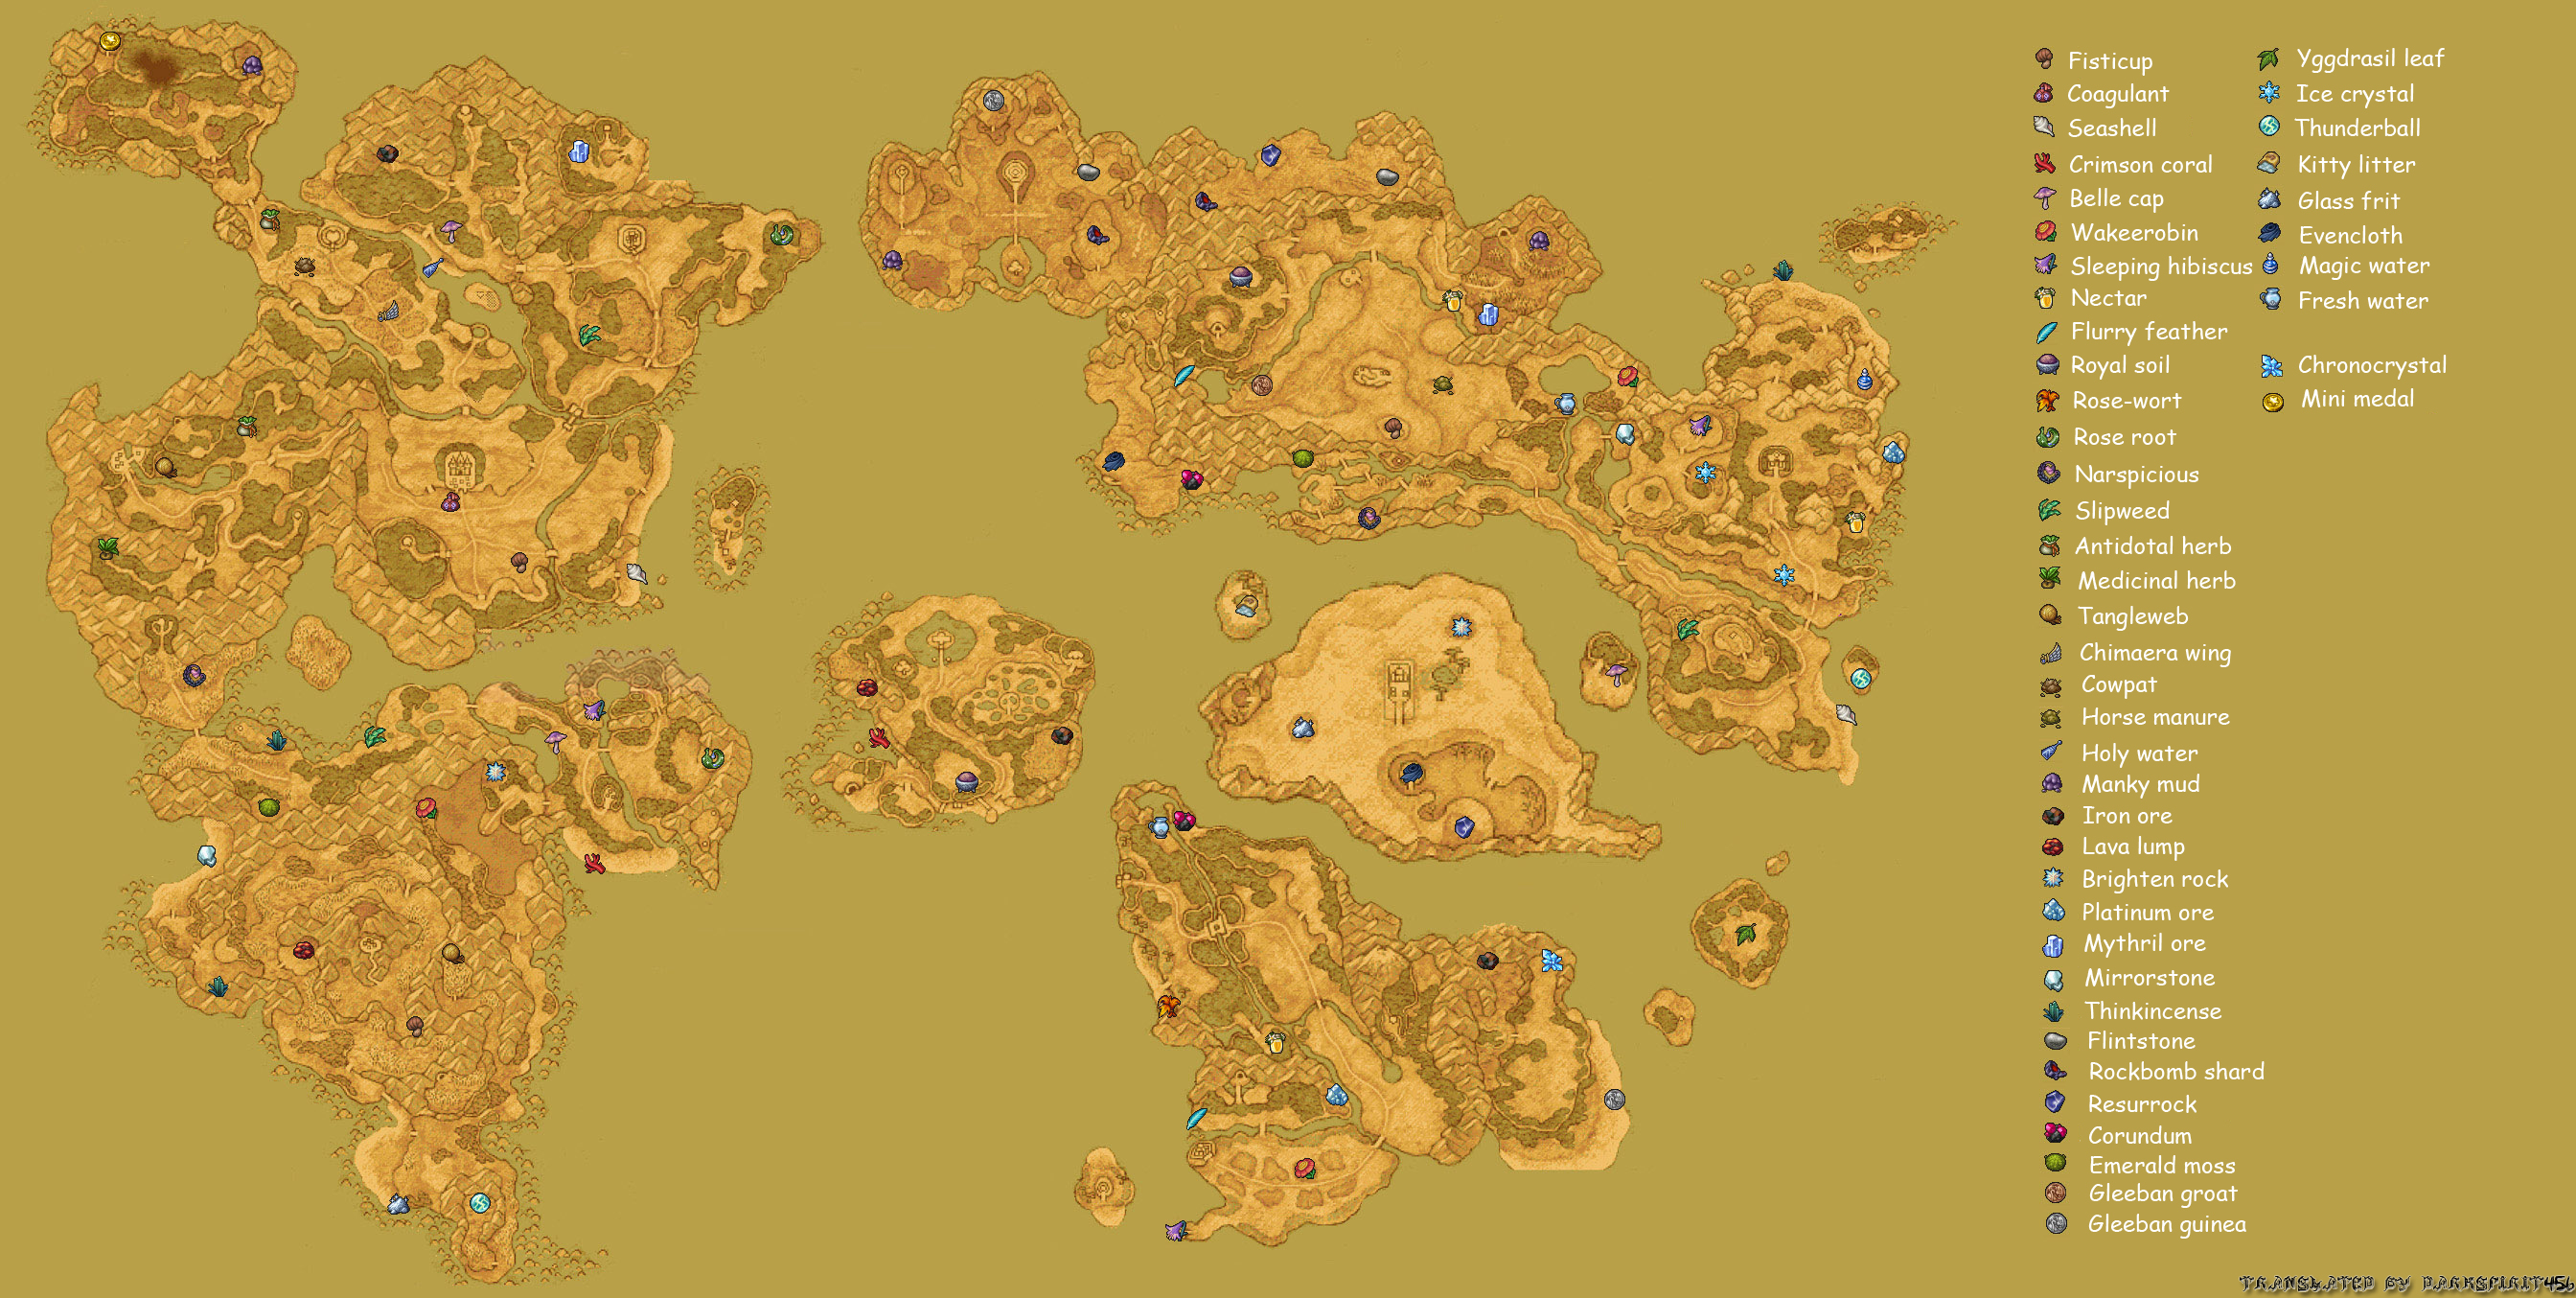 dragon quest 8 3ds world map treasure chests Dragon Quest 8 Map Exoticskyey dragon quest 8 3ds world map treasure chests